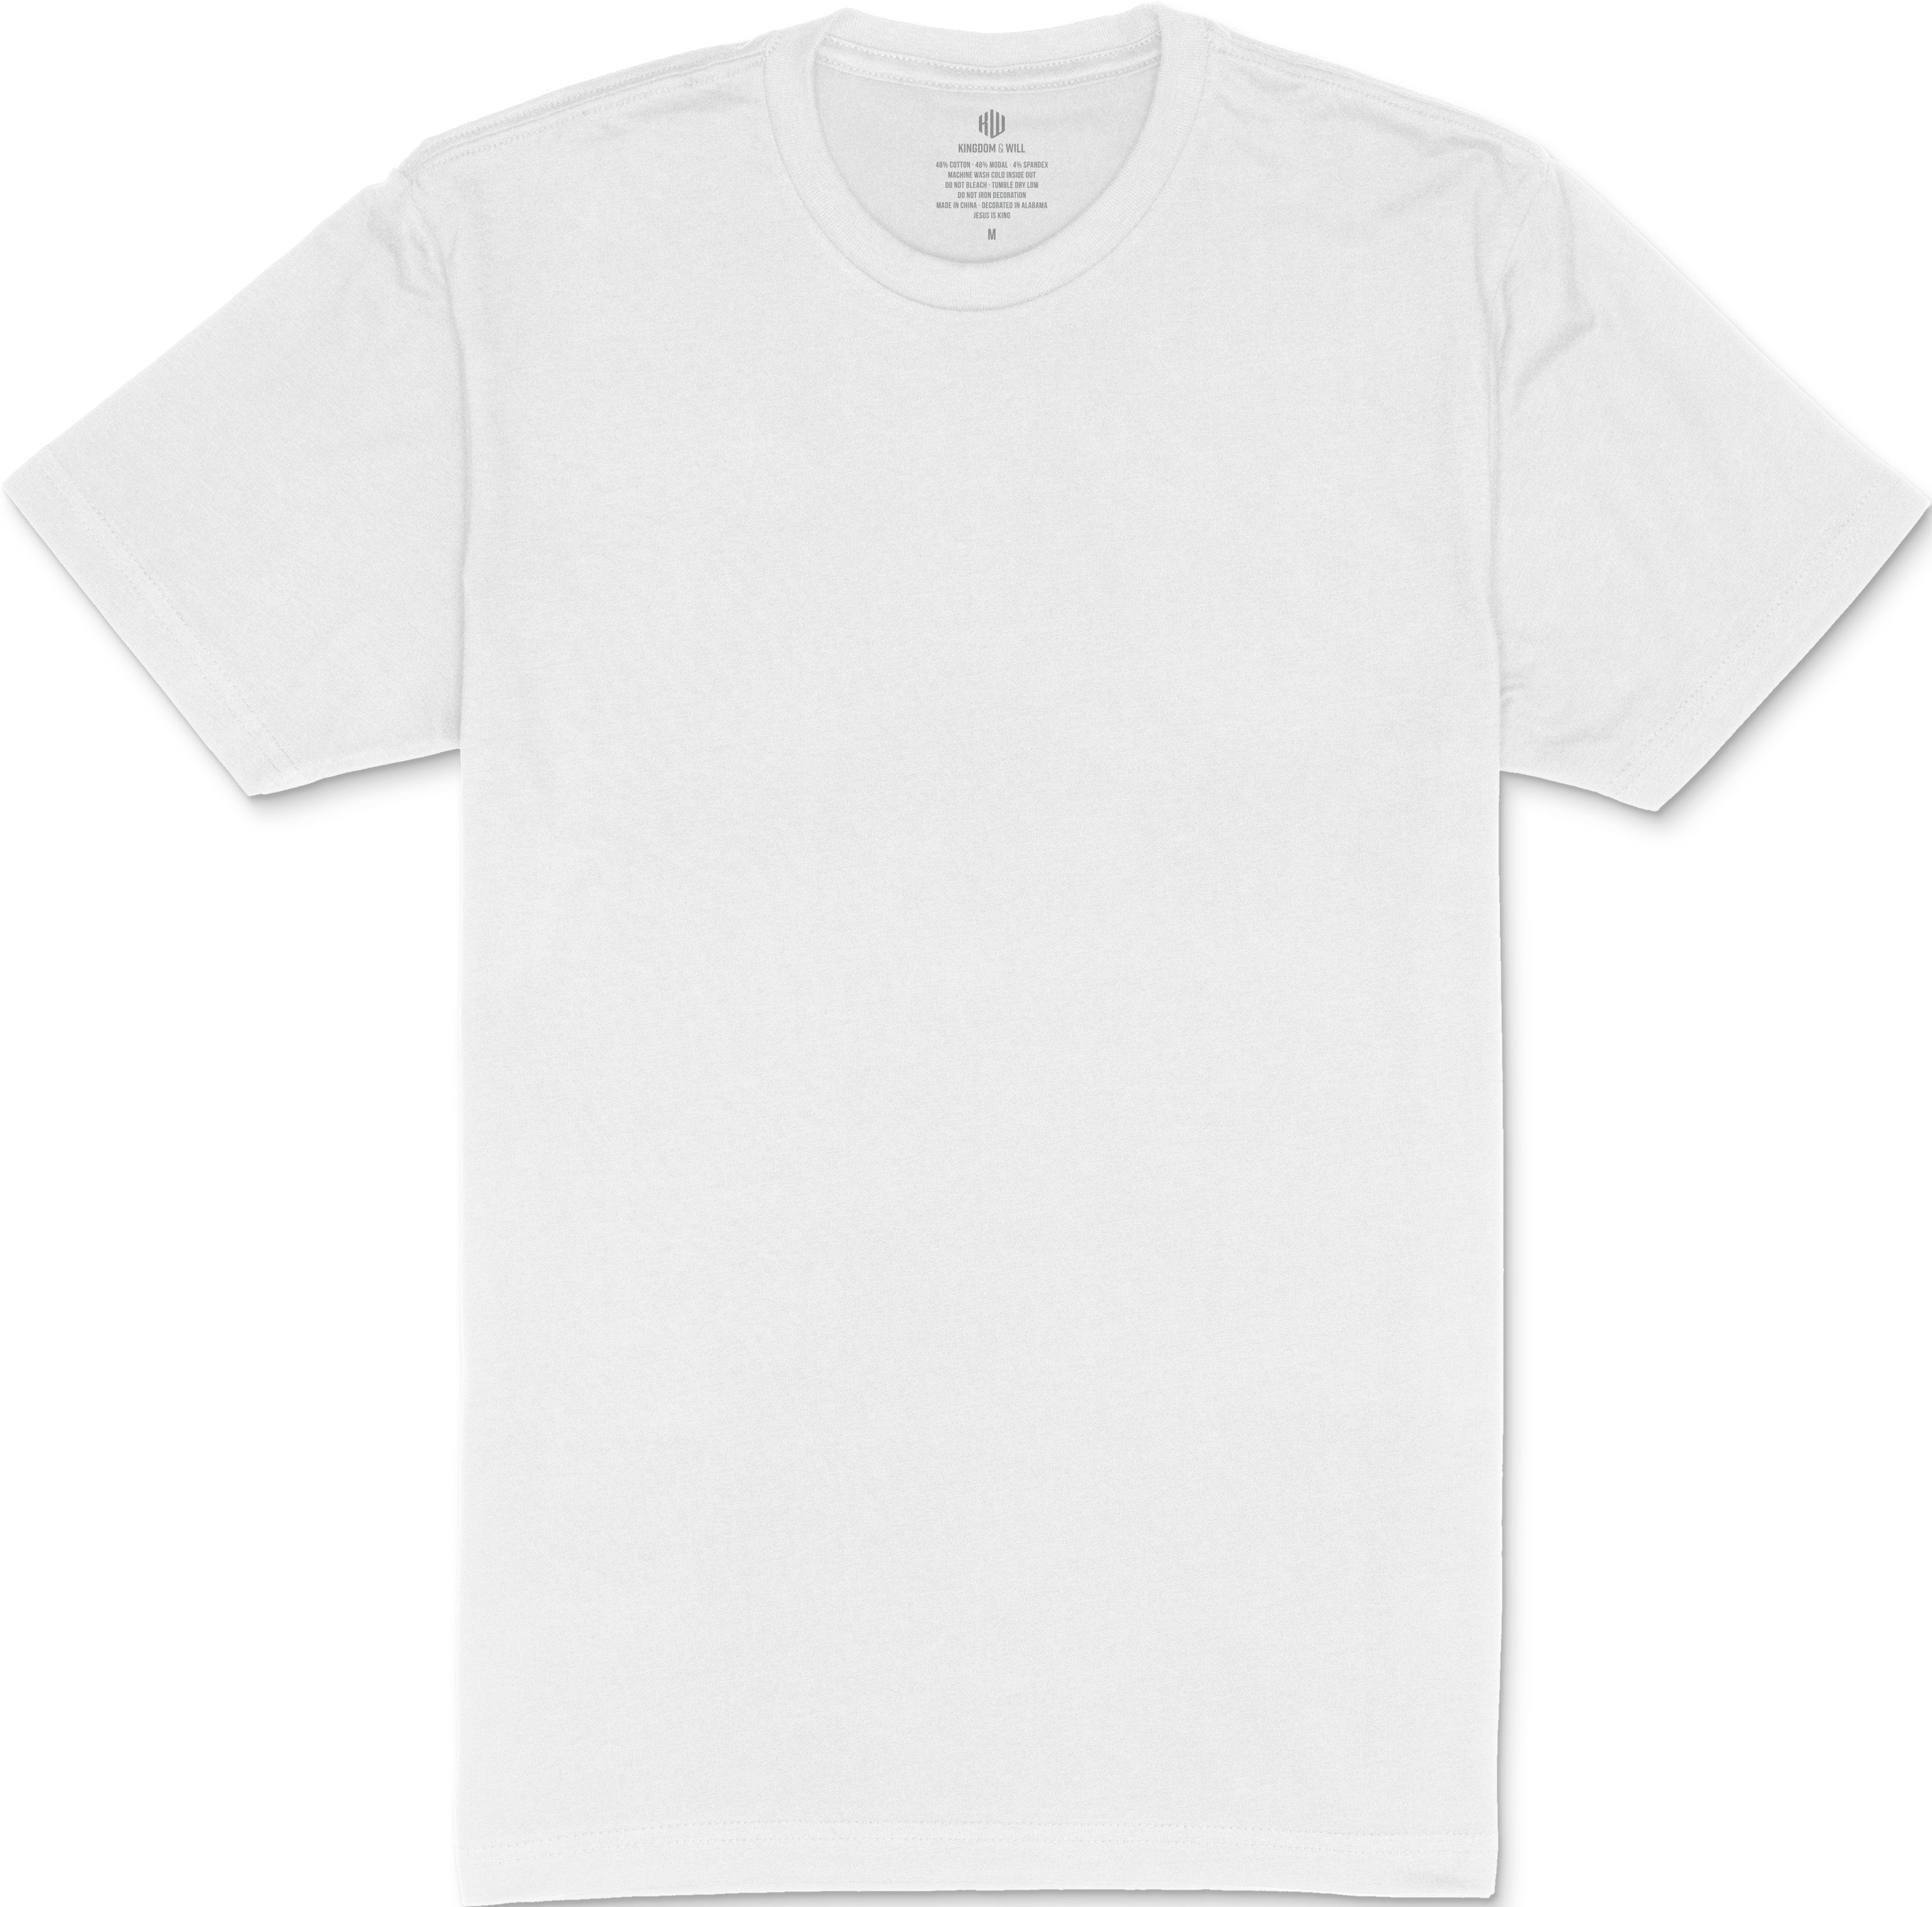 Luxury Comfort T-Shirt (Blank) - Kingdom & Will